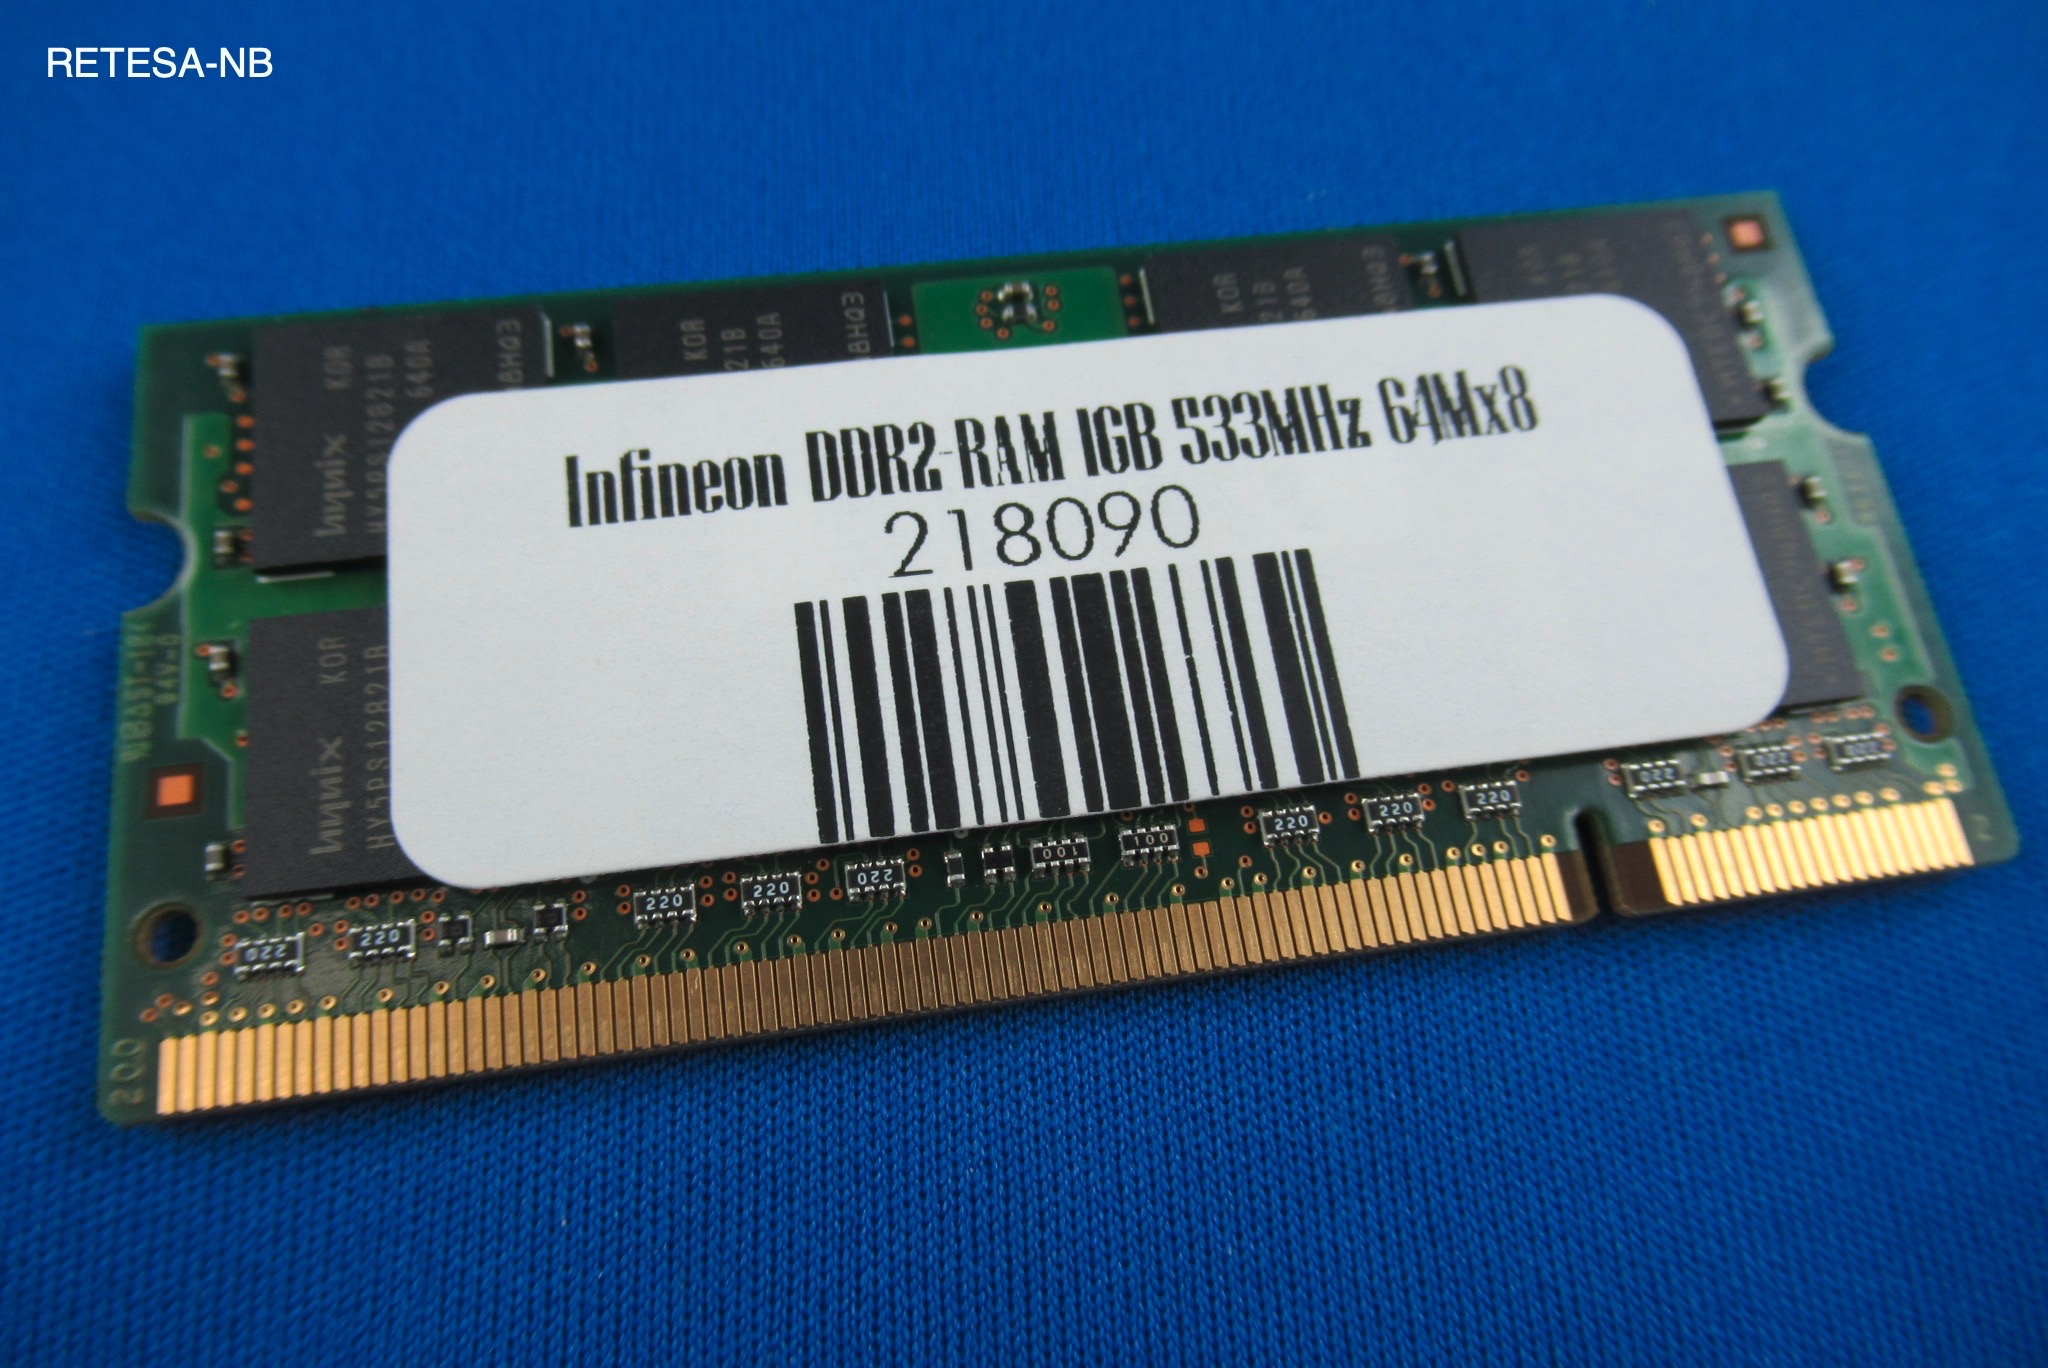 DDR2-RAM 1GB PC533 SoDIMM HYNIX HYMP512S64BP8-C4